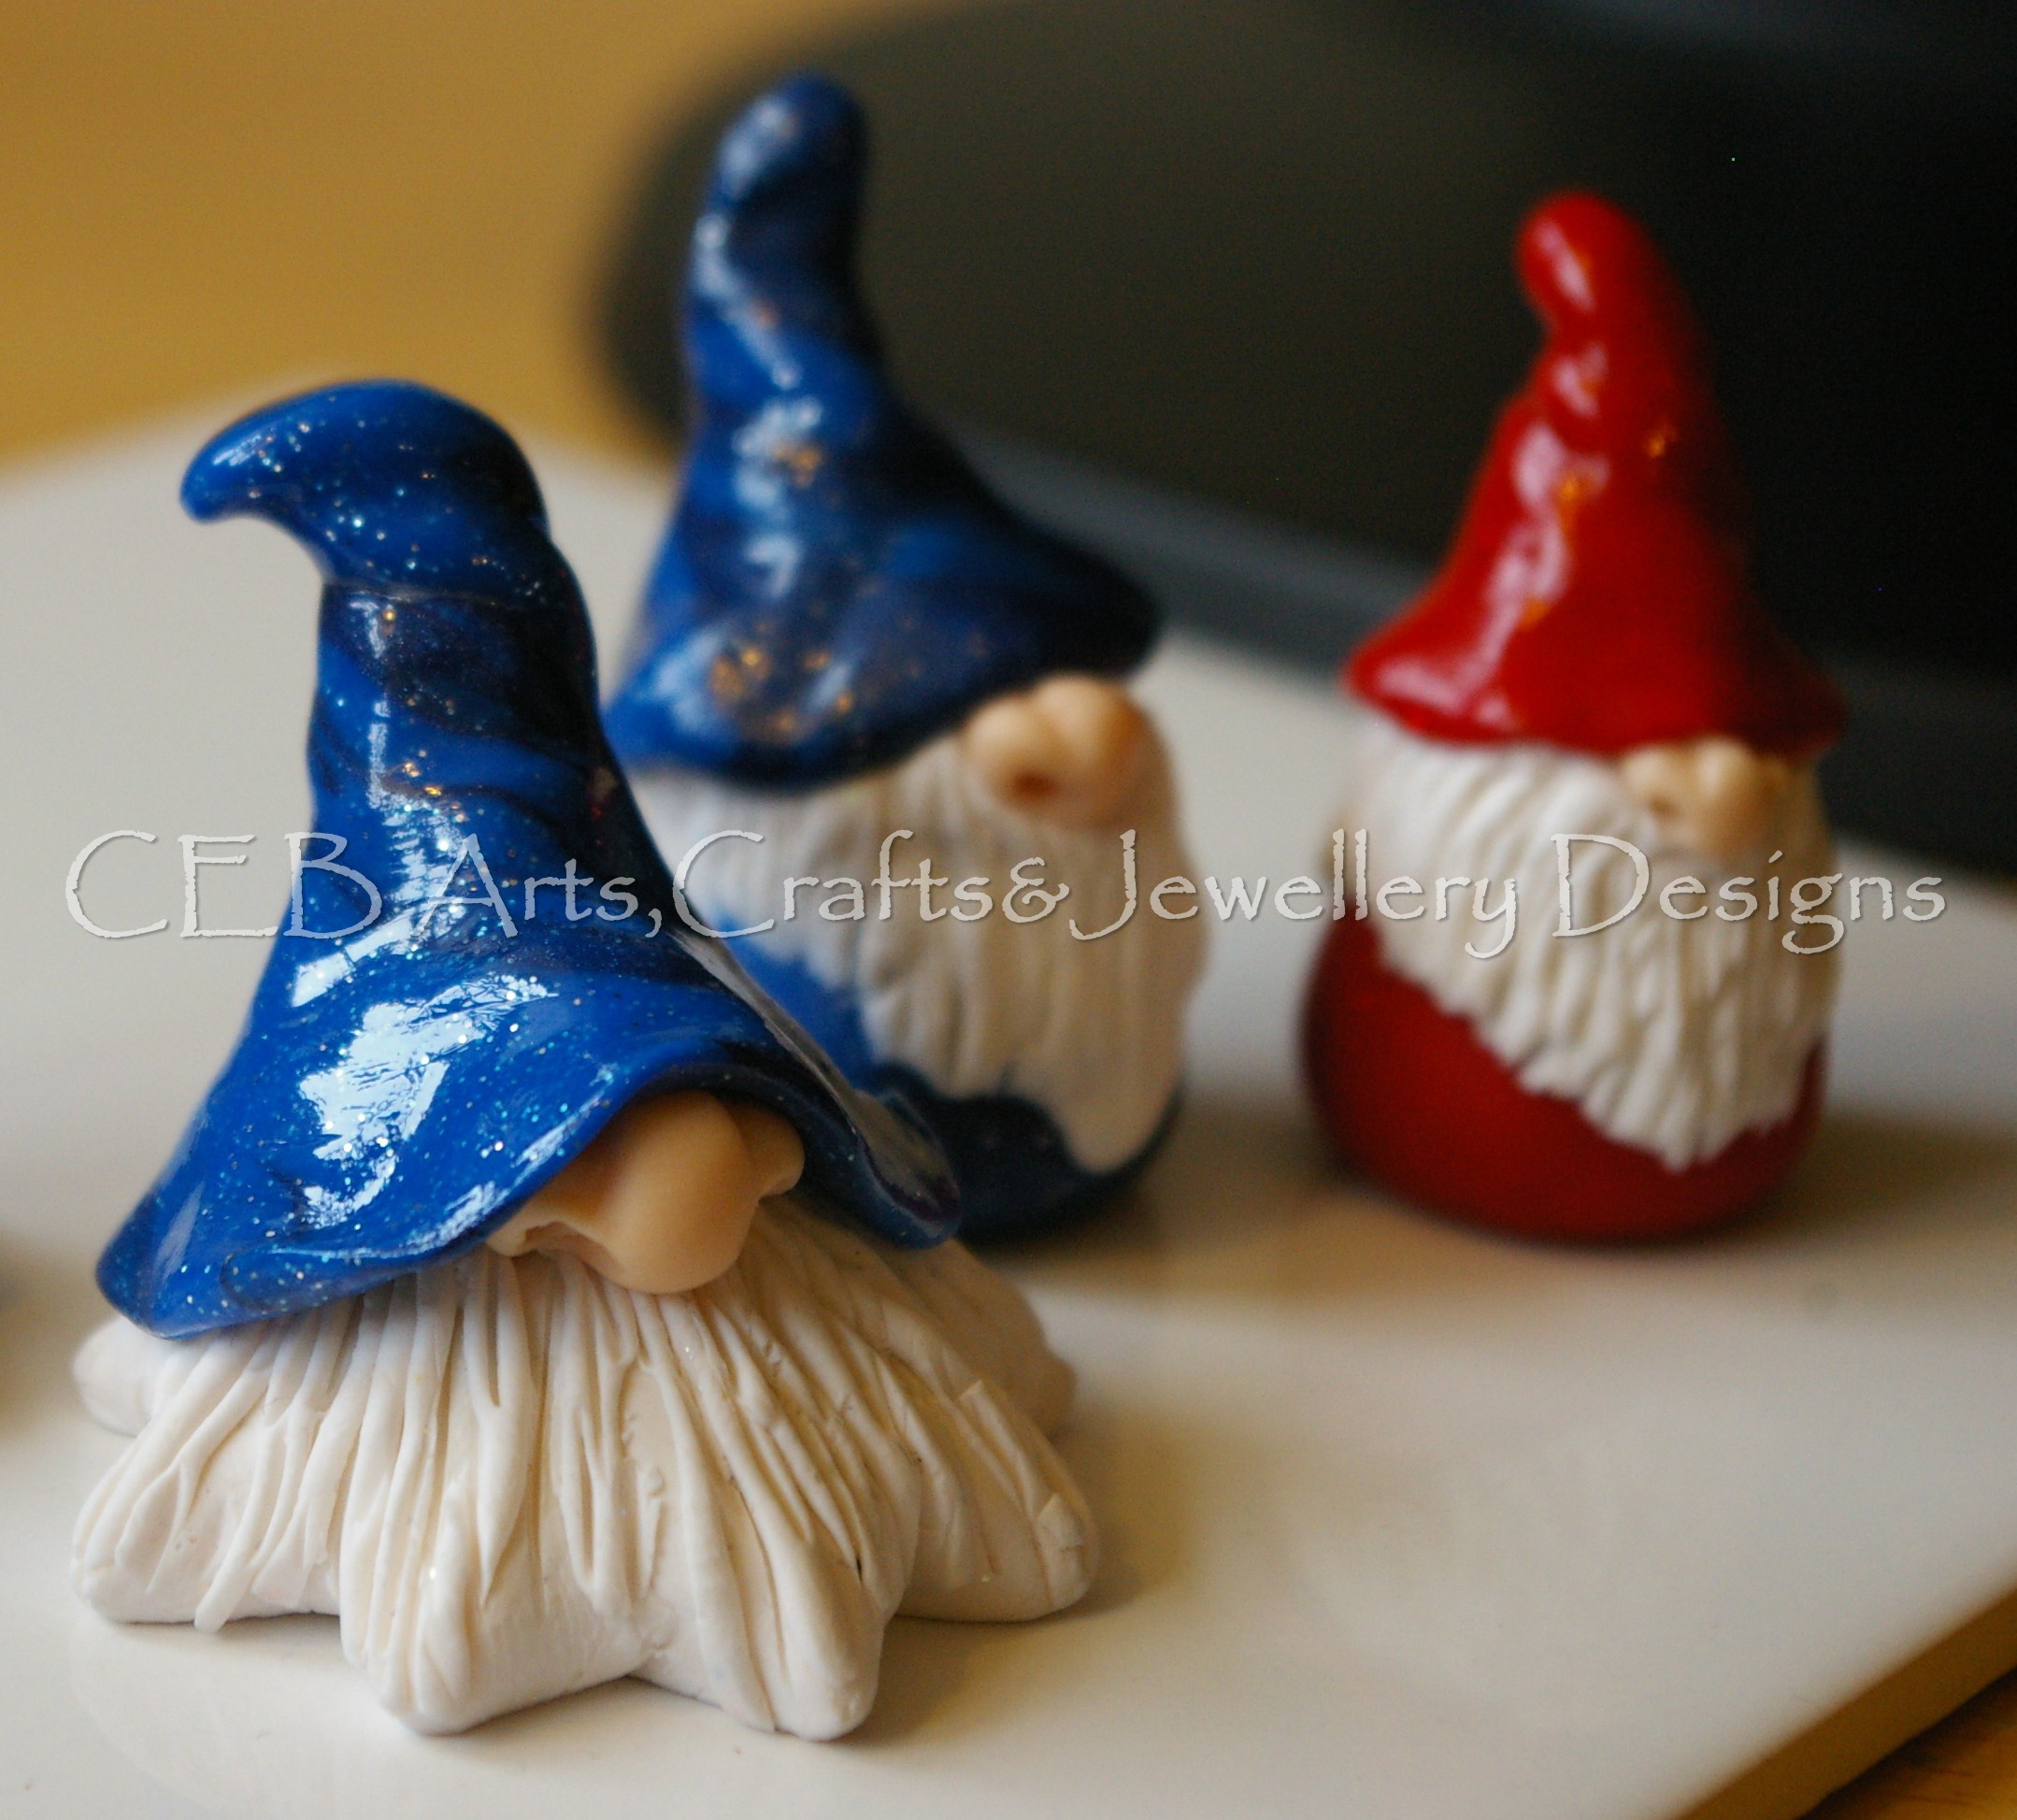 My Handmade Polymer Clay Gnomes | cebartscraftsandjewellerydesigns2158 x 1947